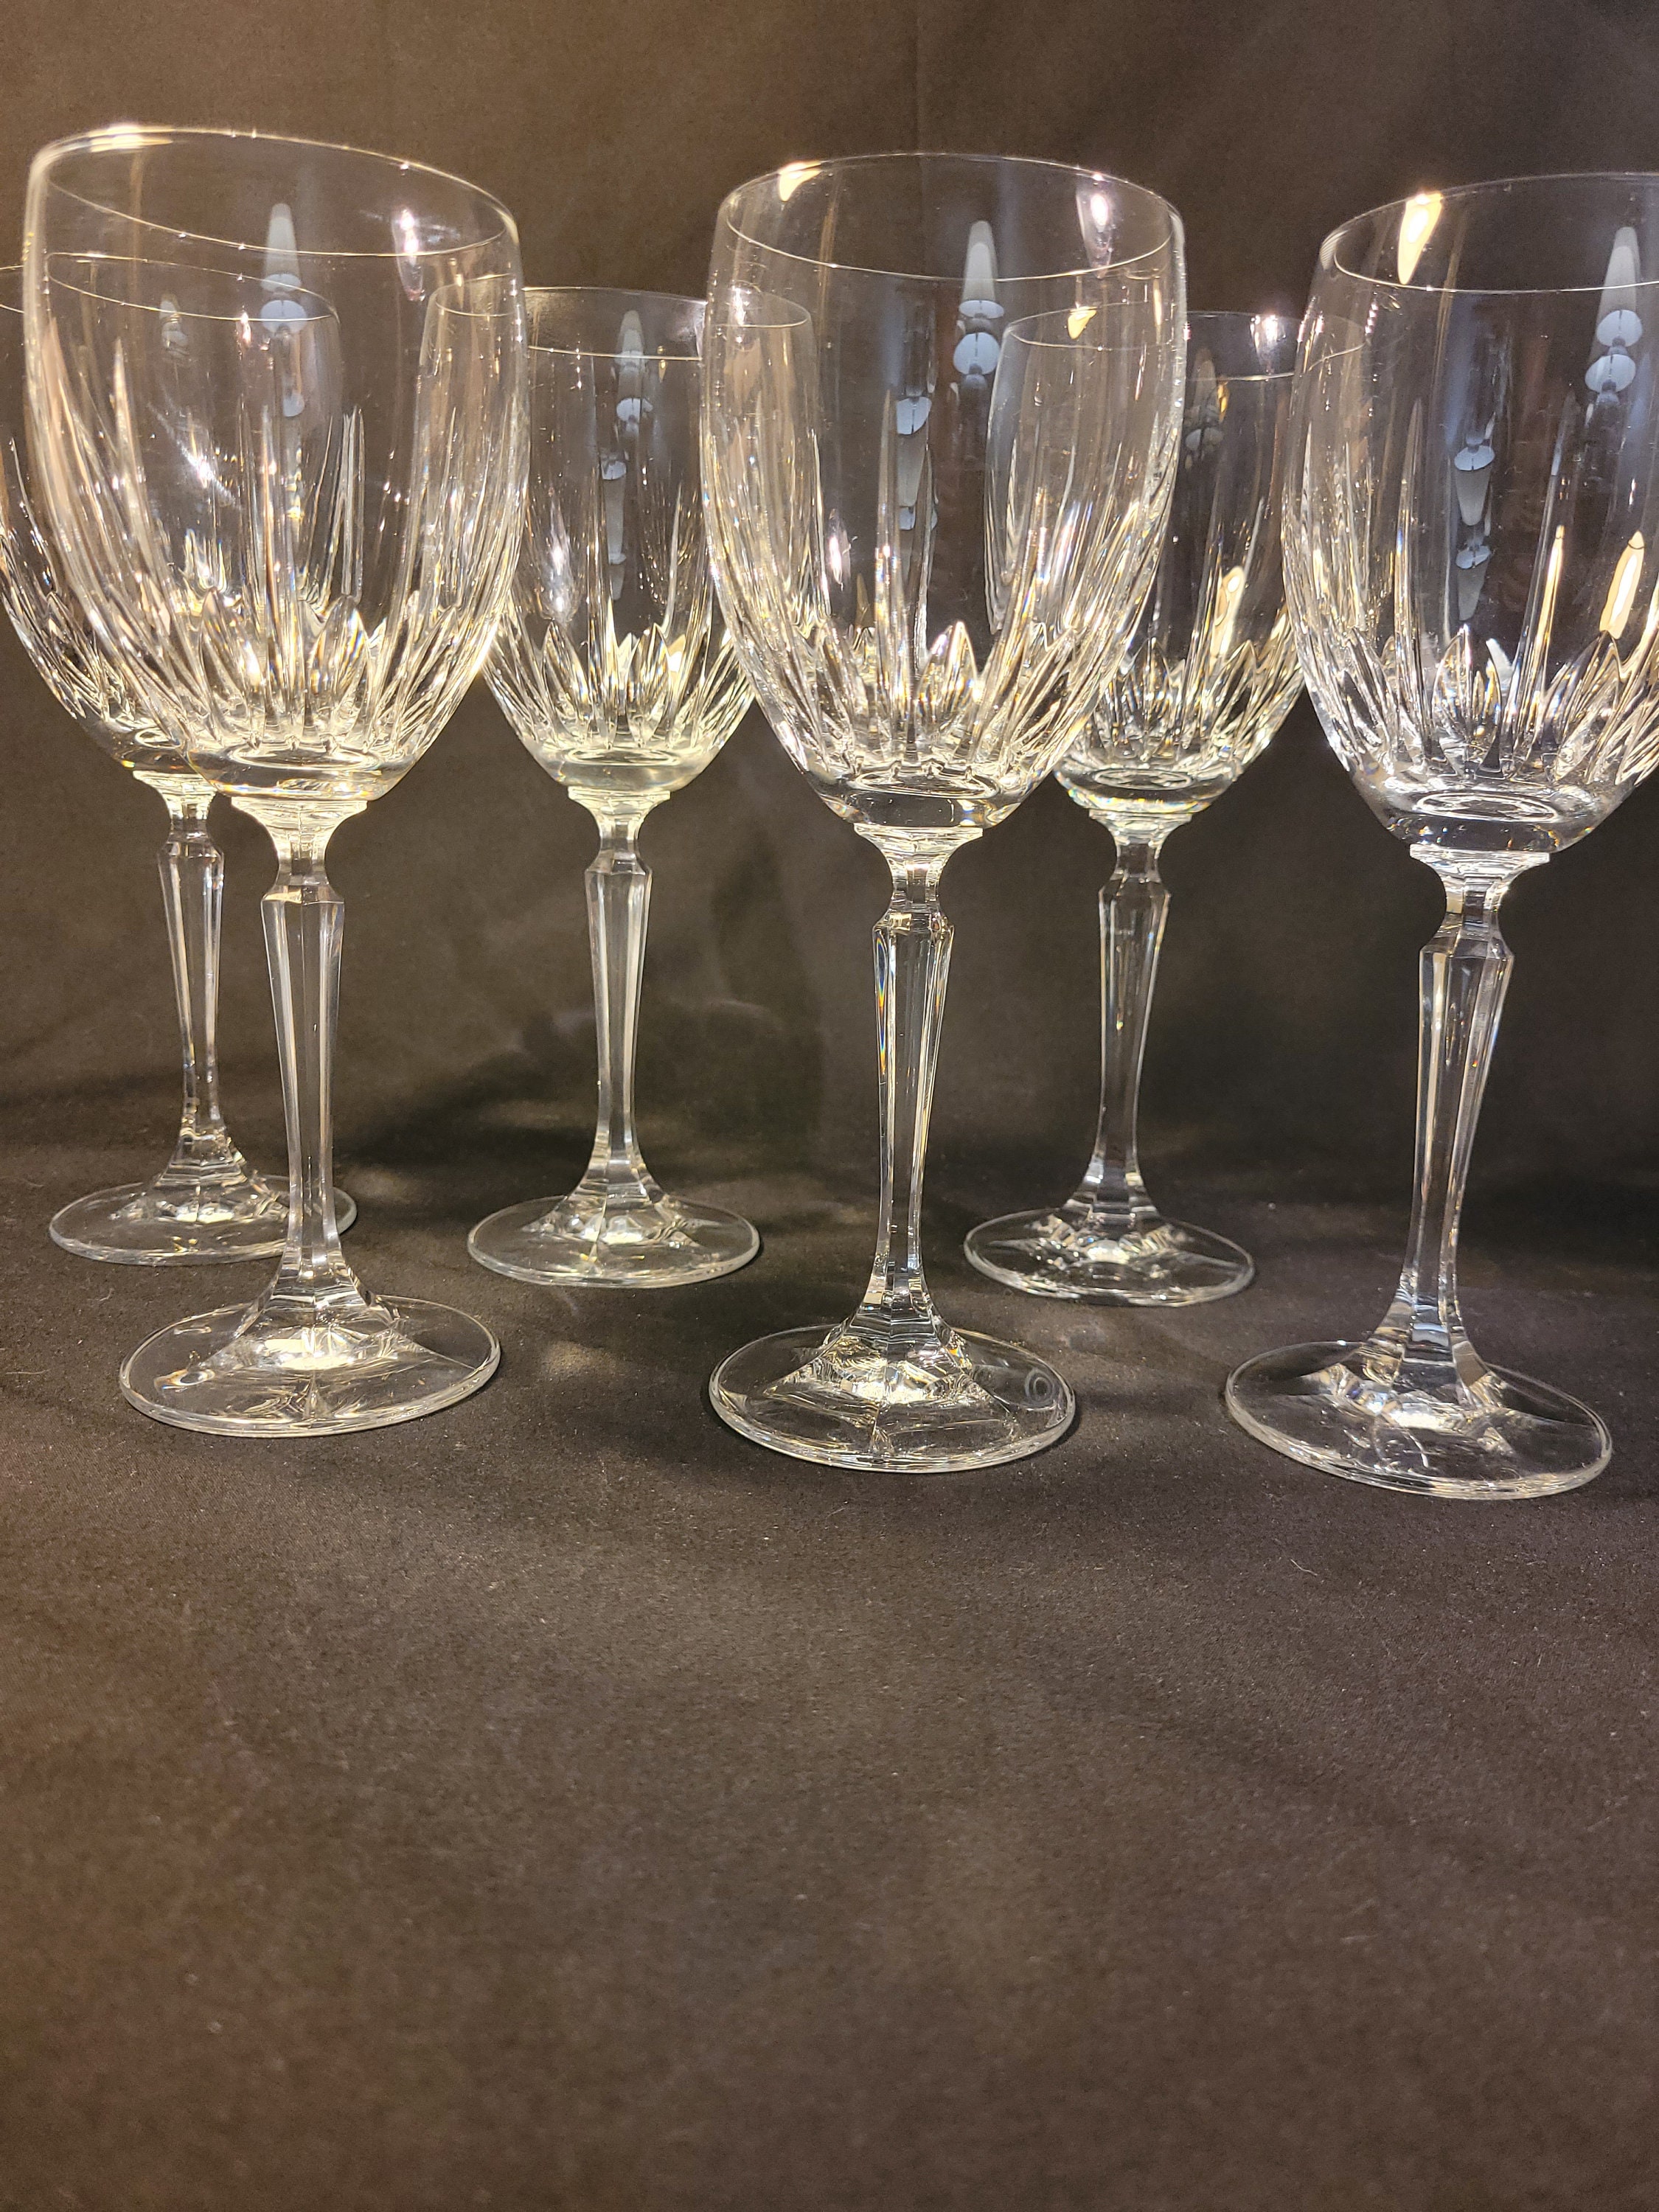 Crystal liquor glasses, 60ml, 6 pieces - Cristalopolis